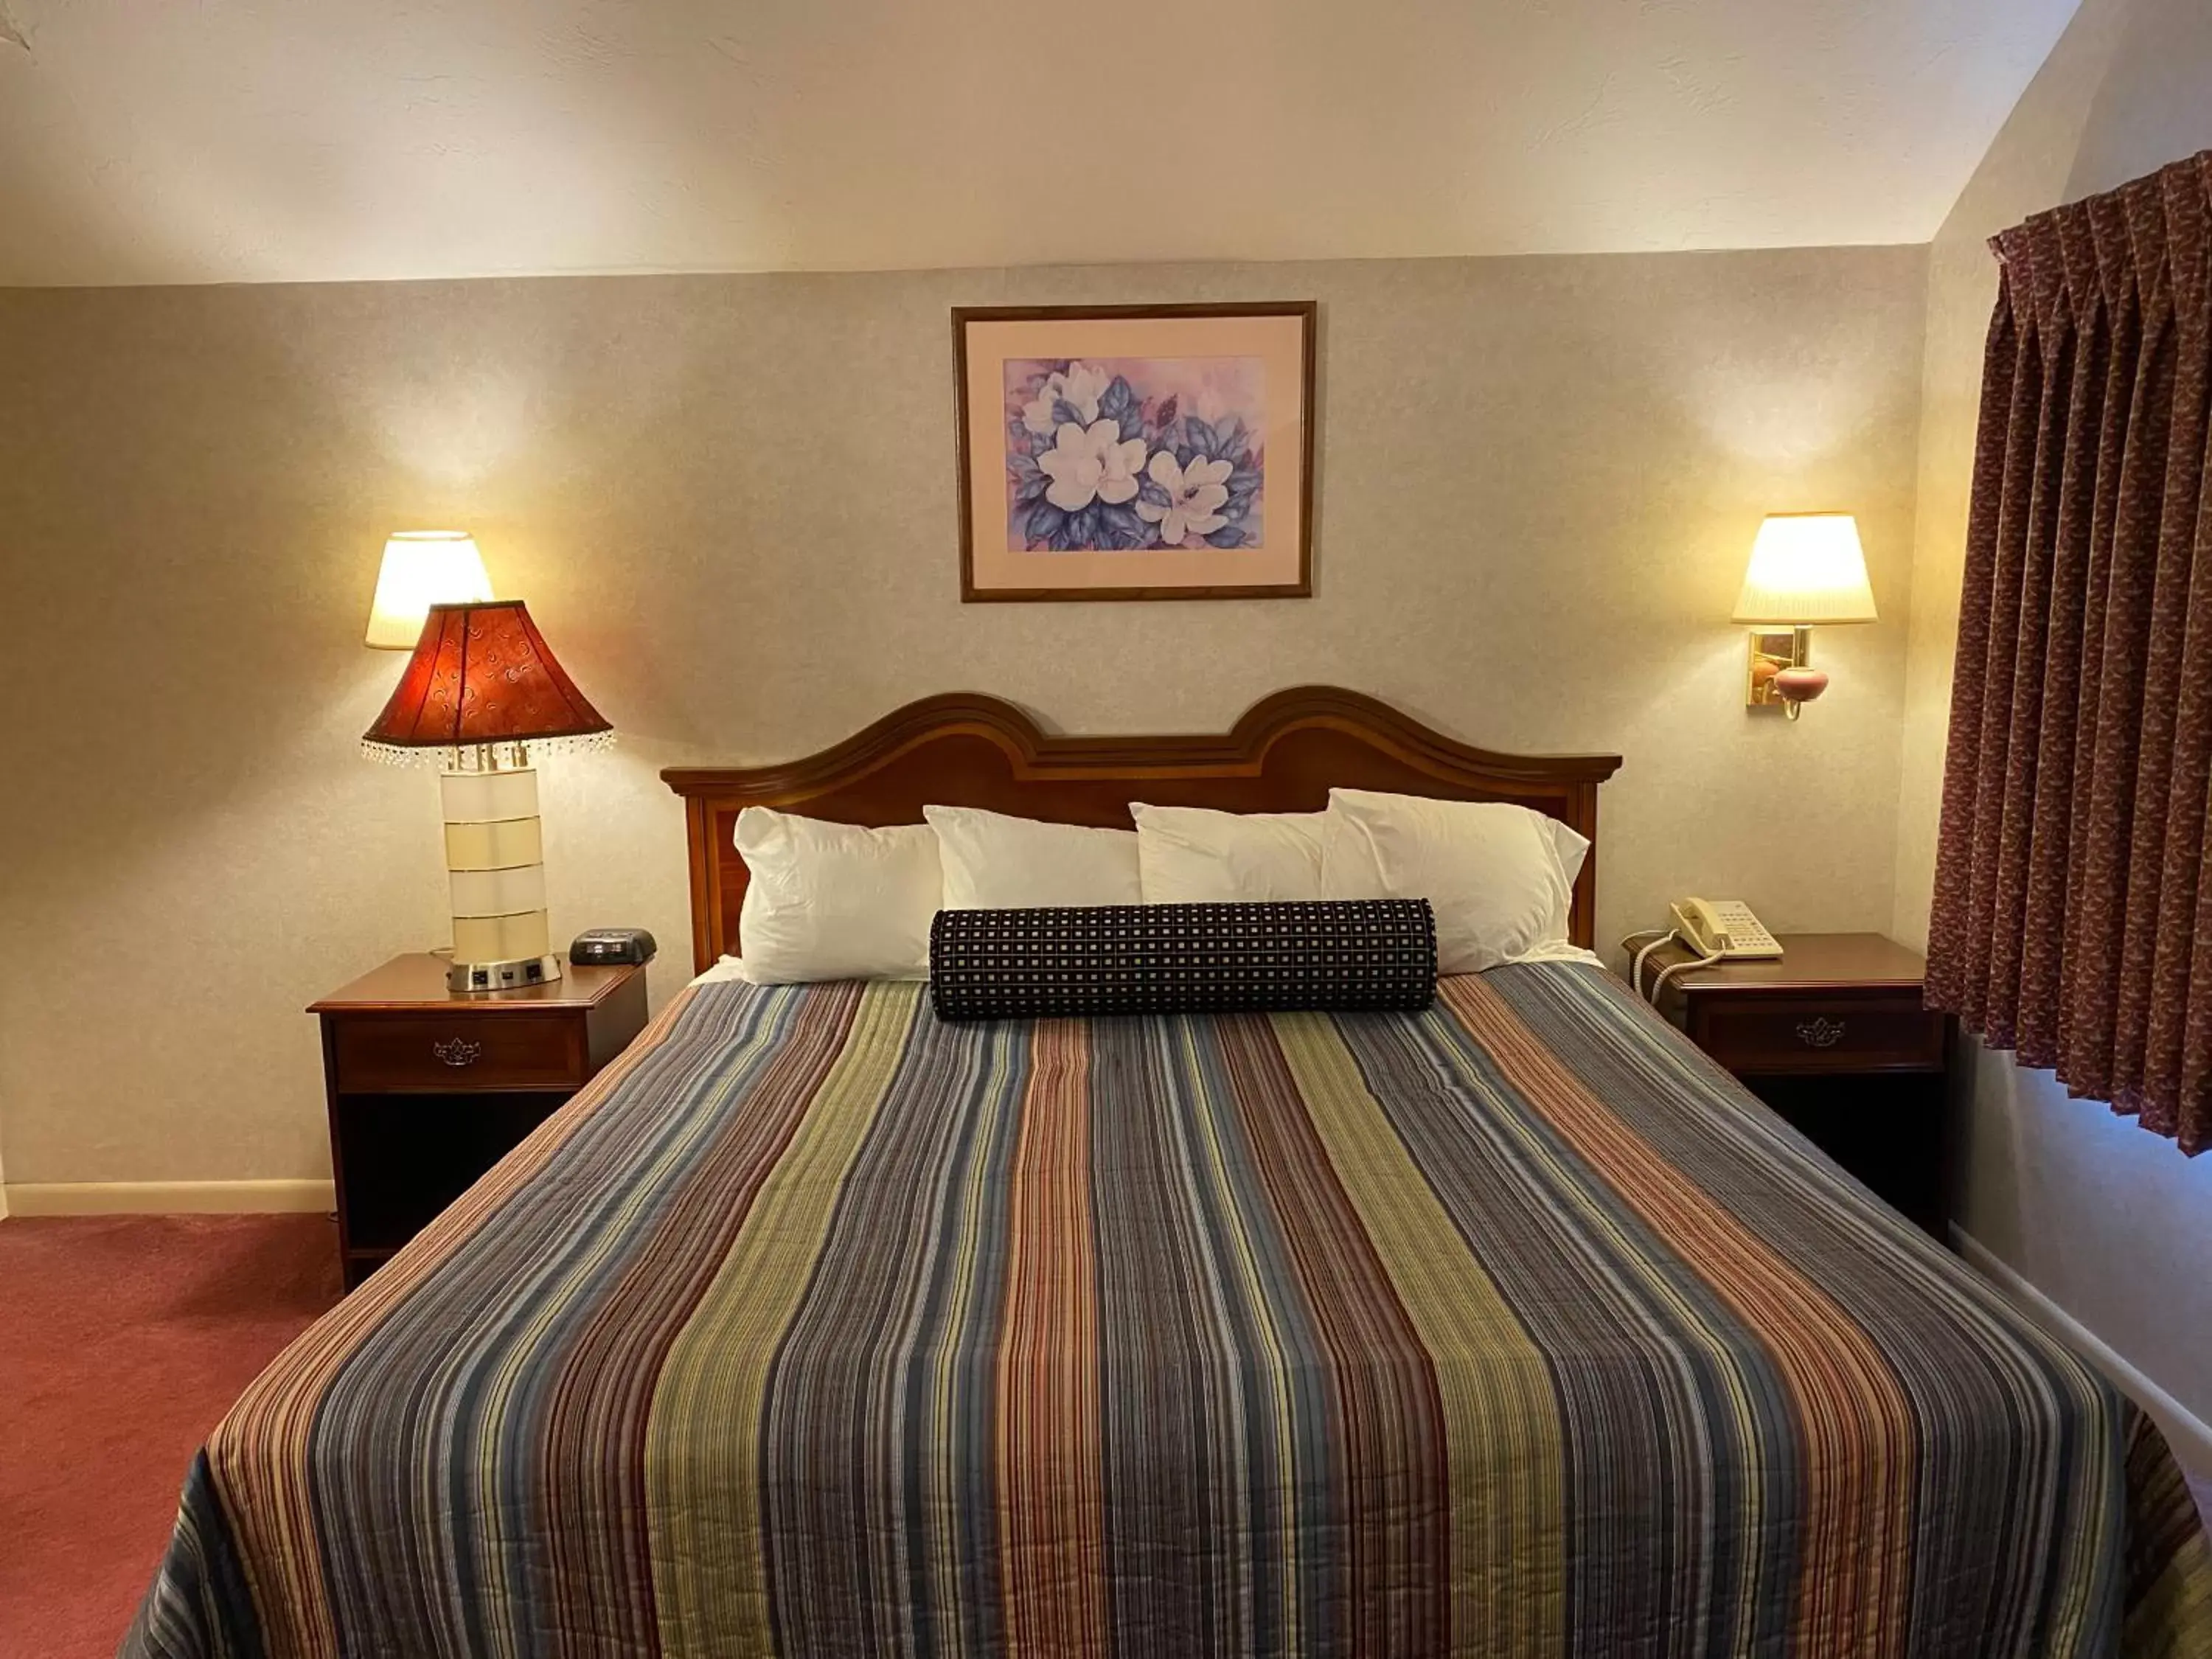 Bed in Economy Lodge 682 Main St Sturbridge